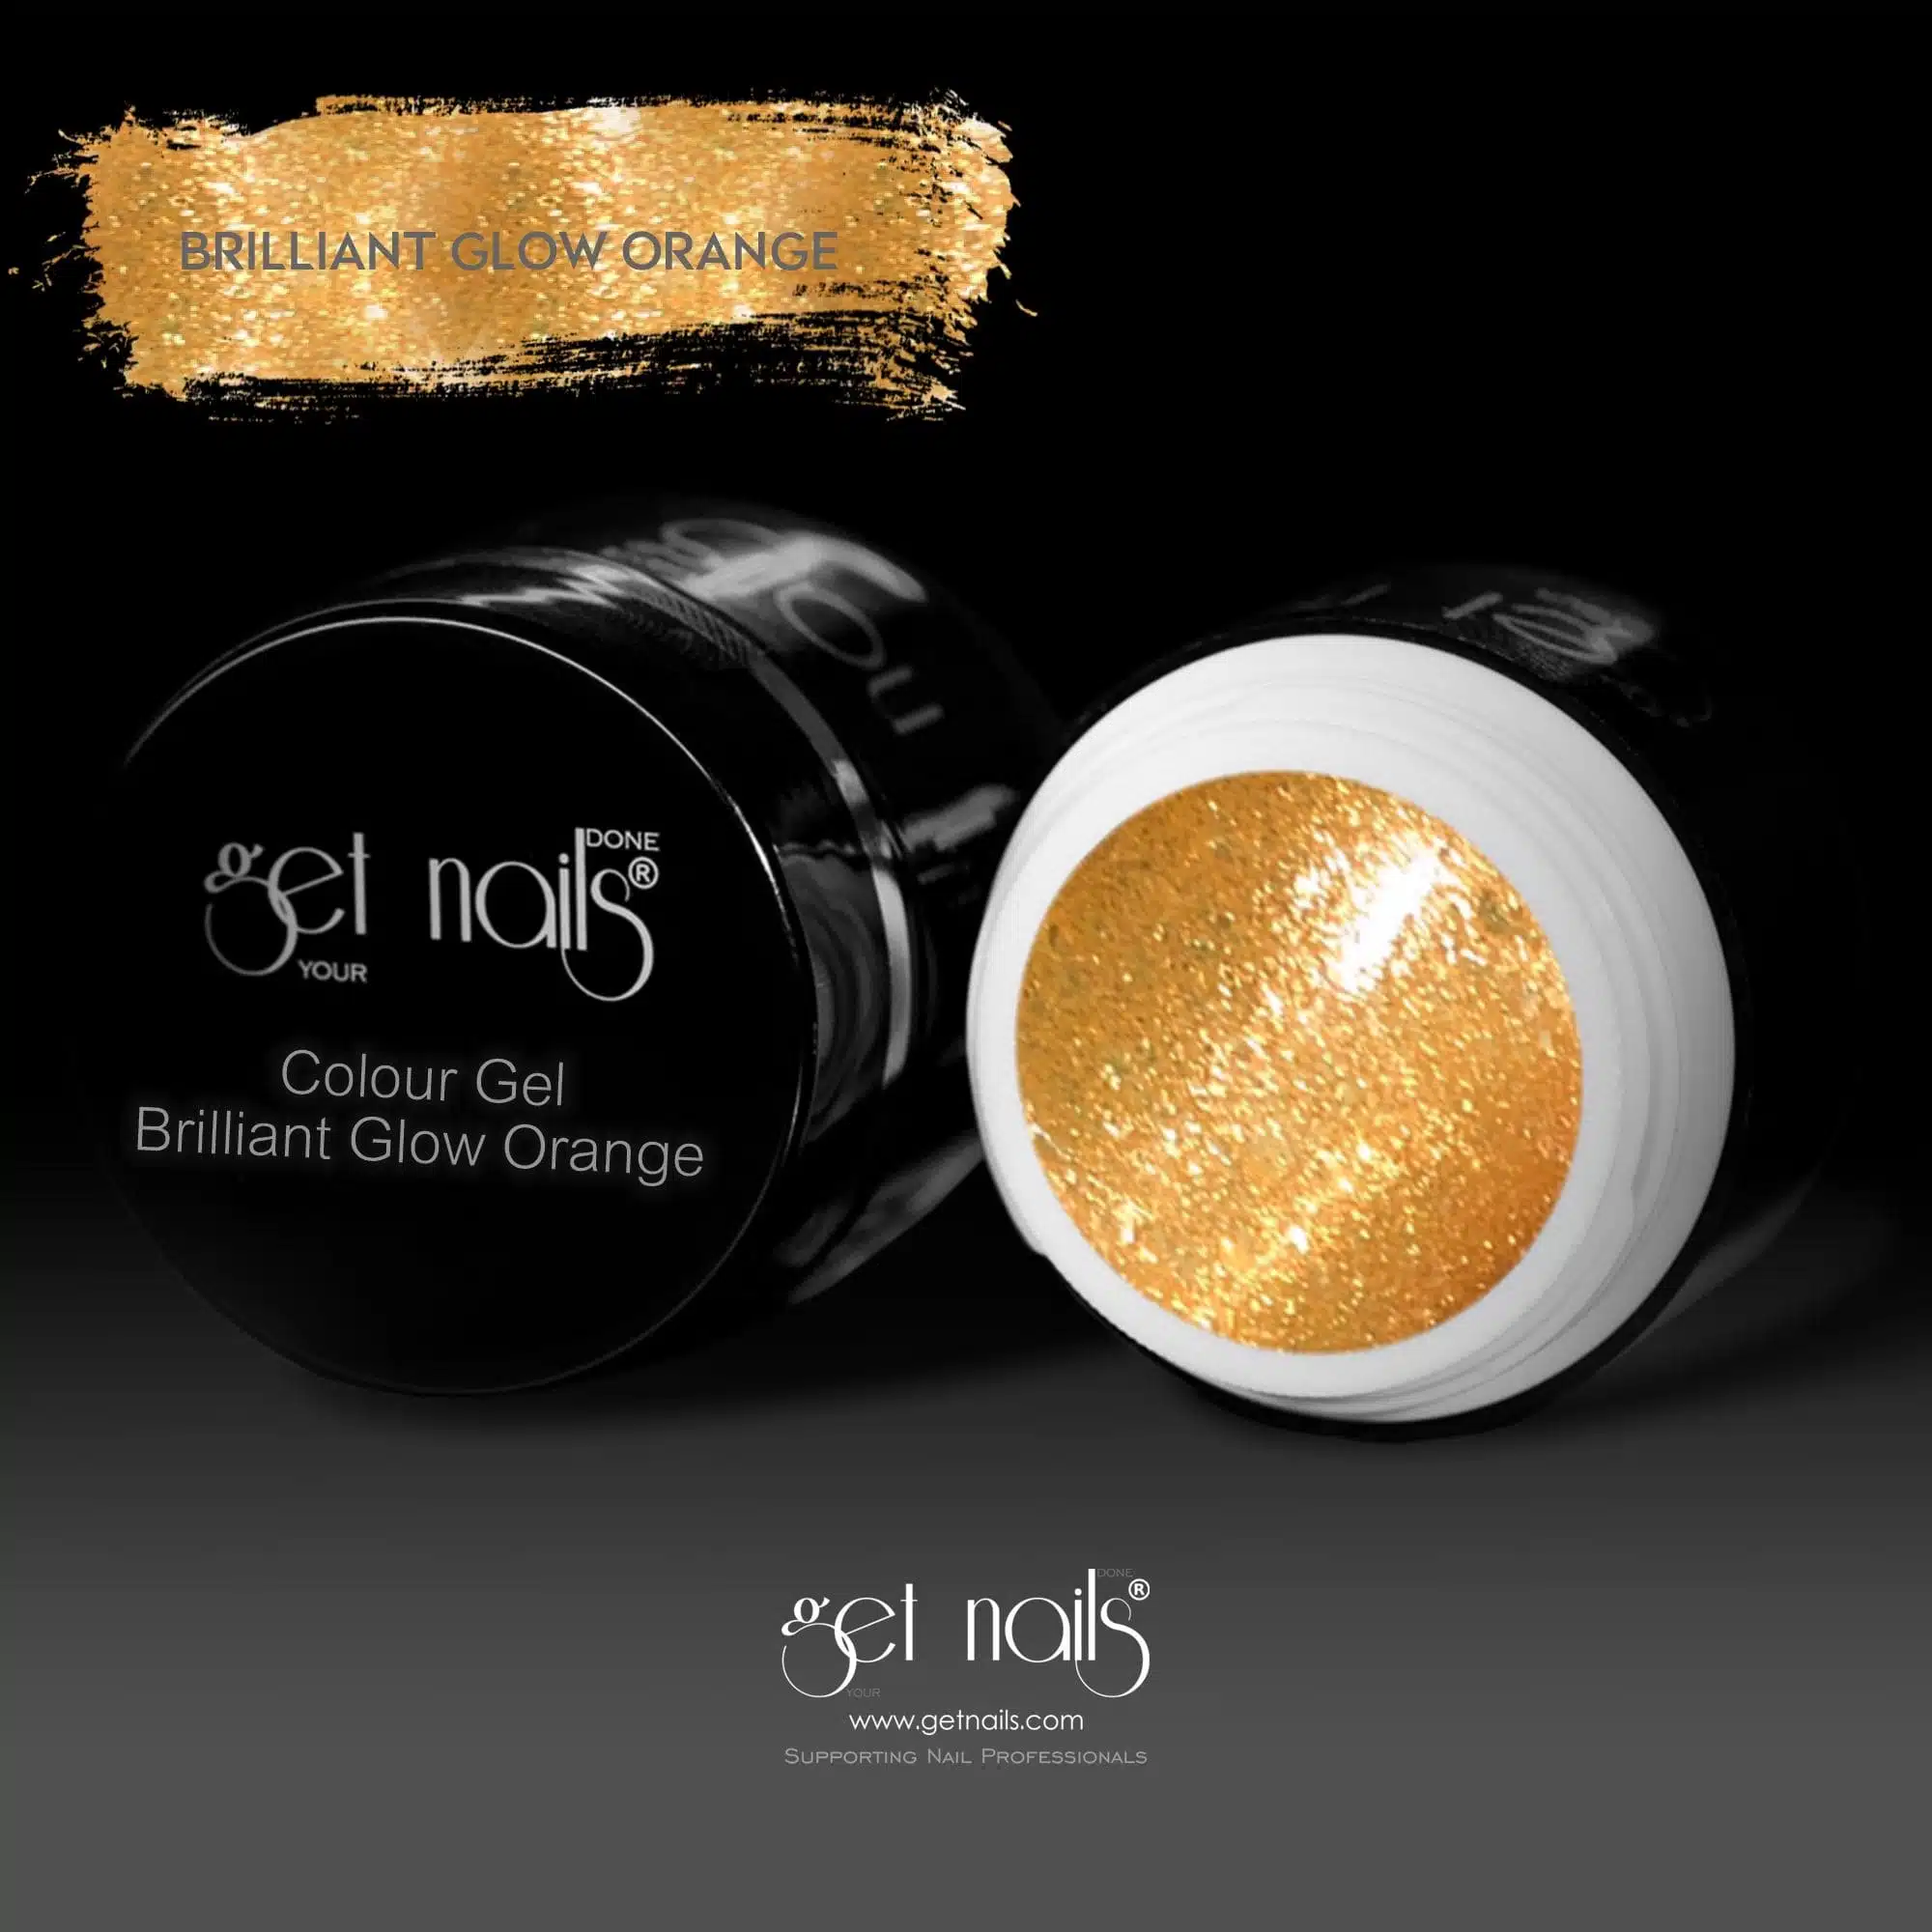 Get Nails Austria - Colour Gel Brilliant Glow Orange 5g